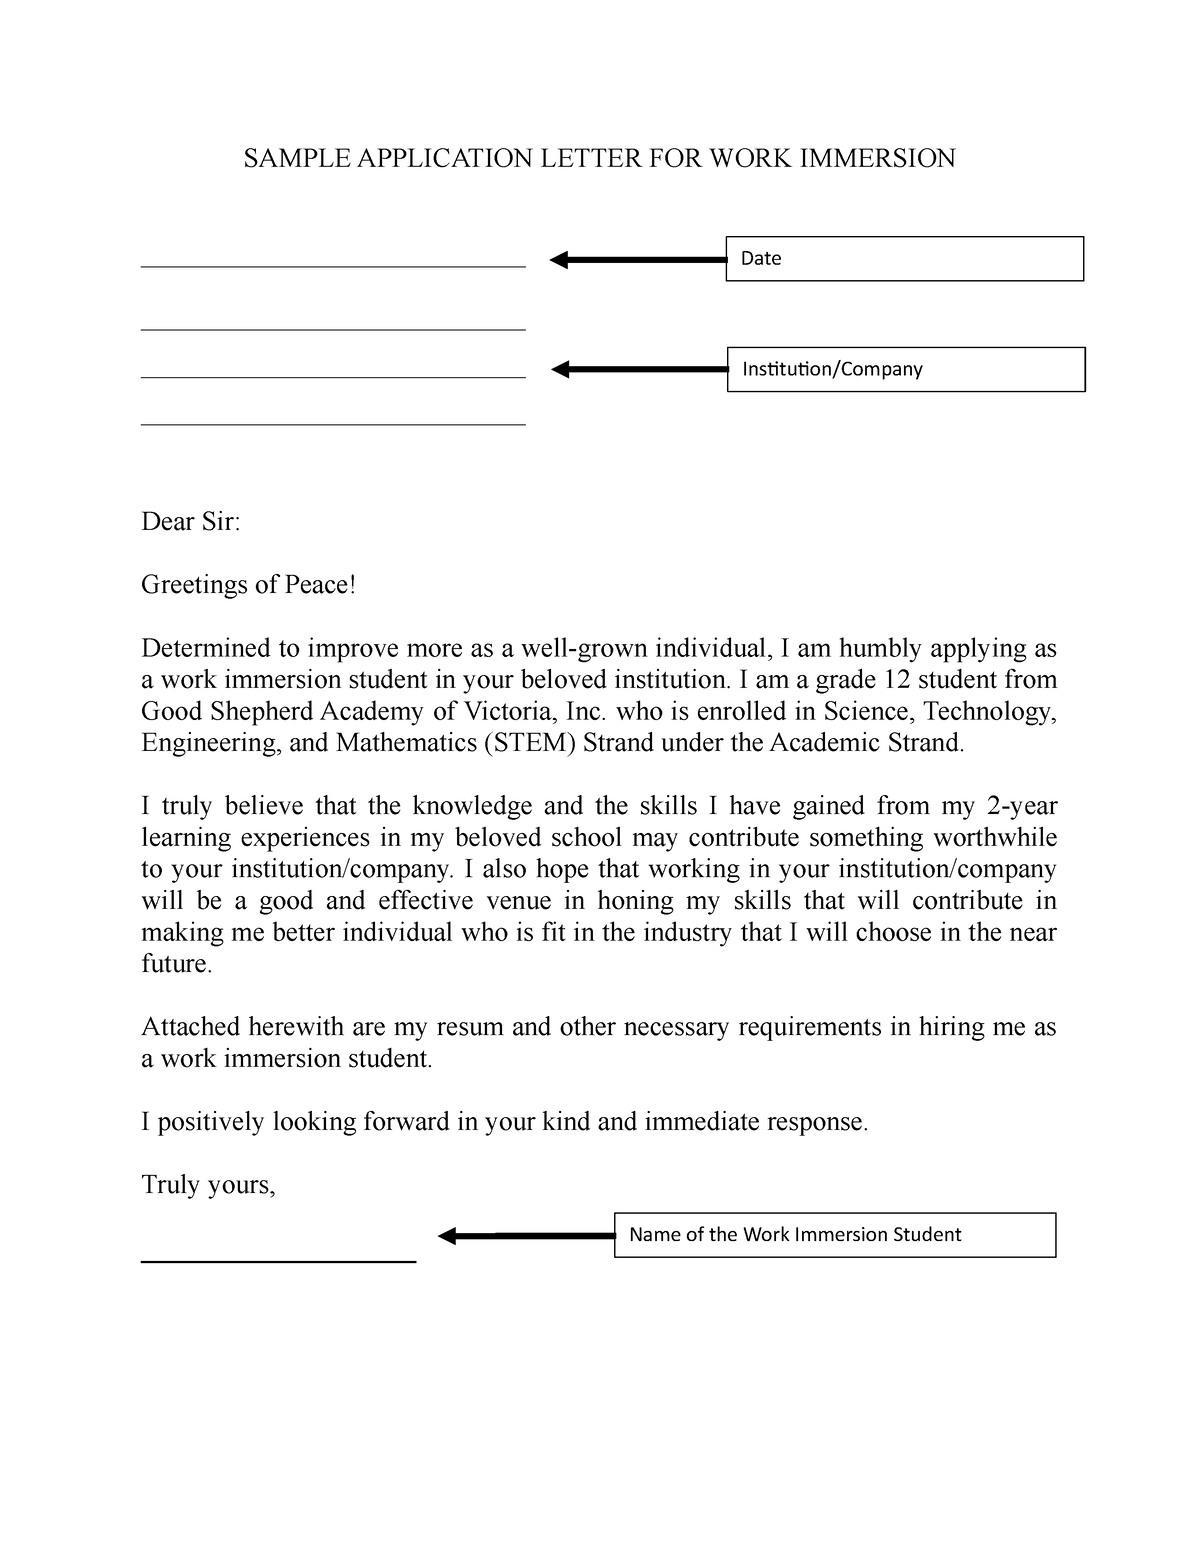 application letter for work immersion stem student